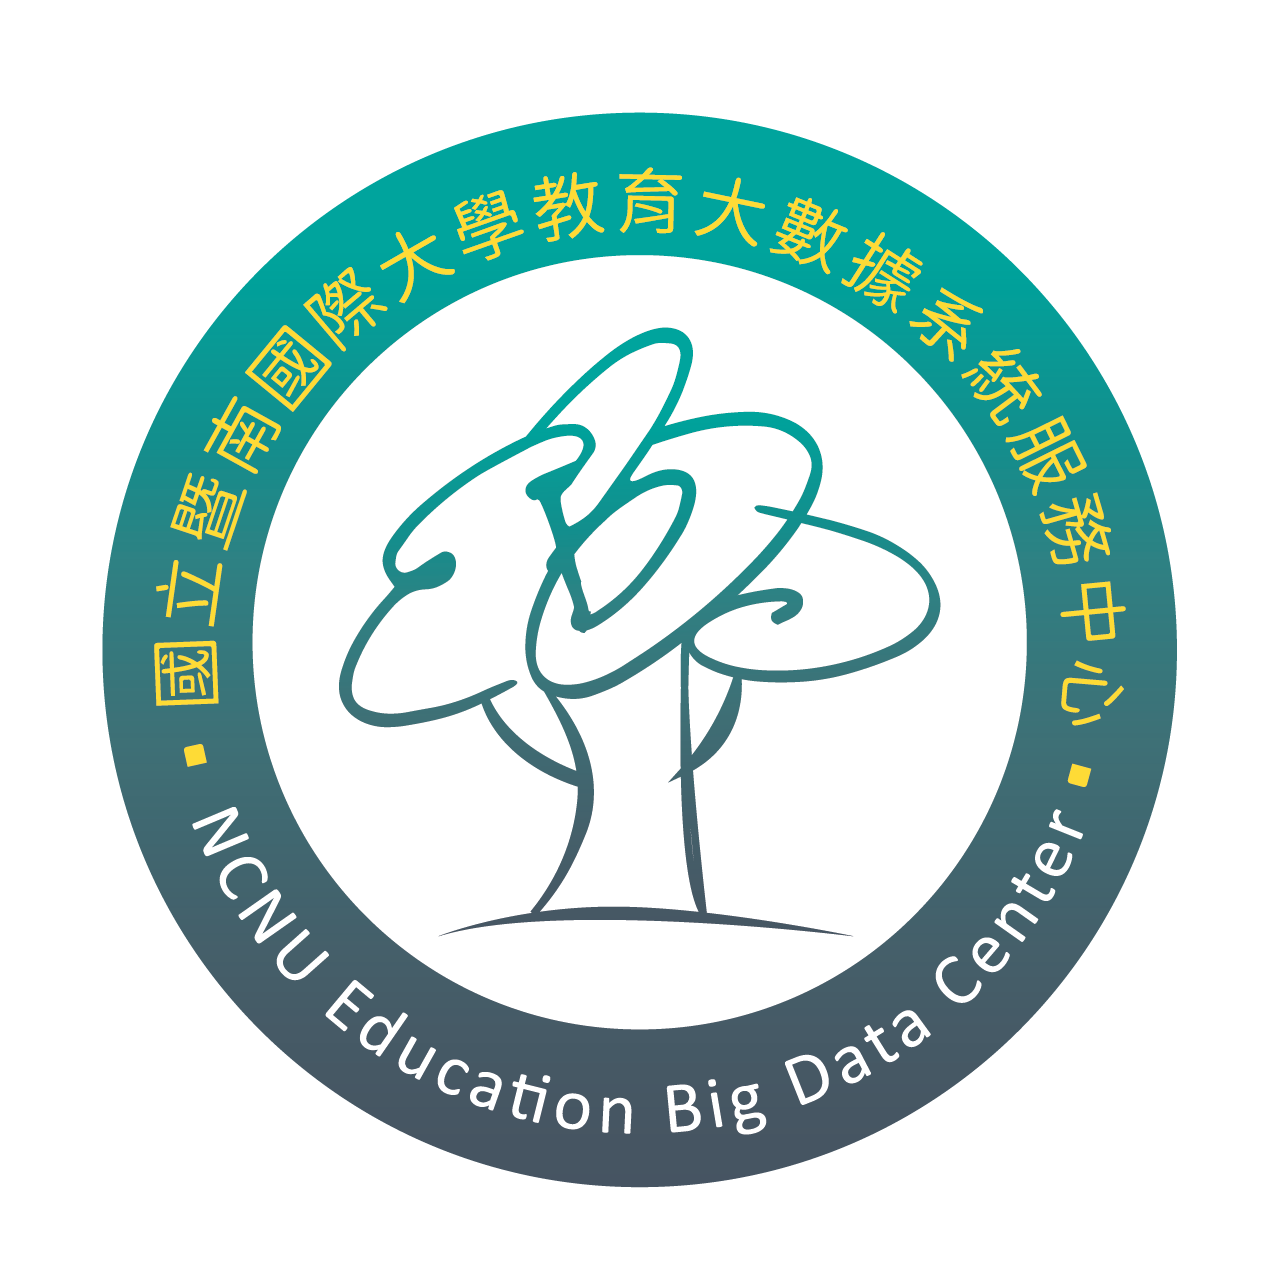 Education Big Data Center